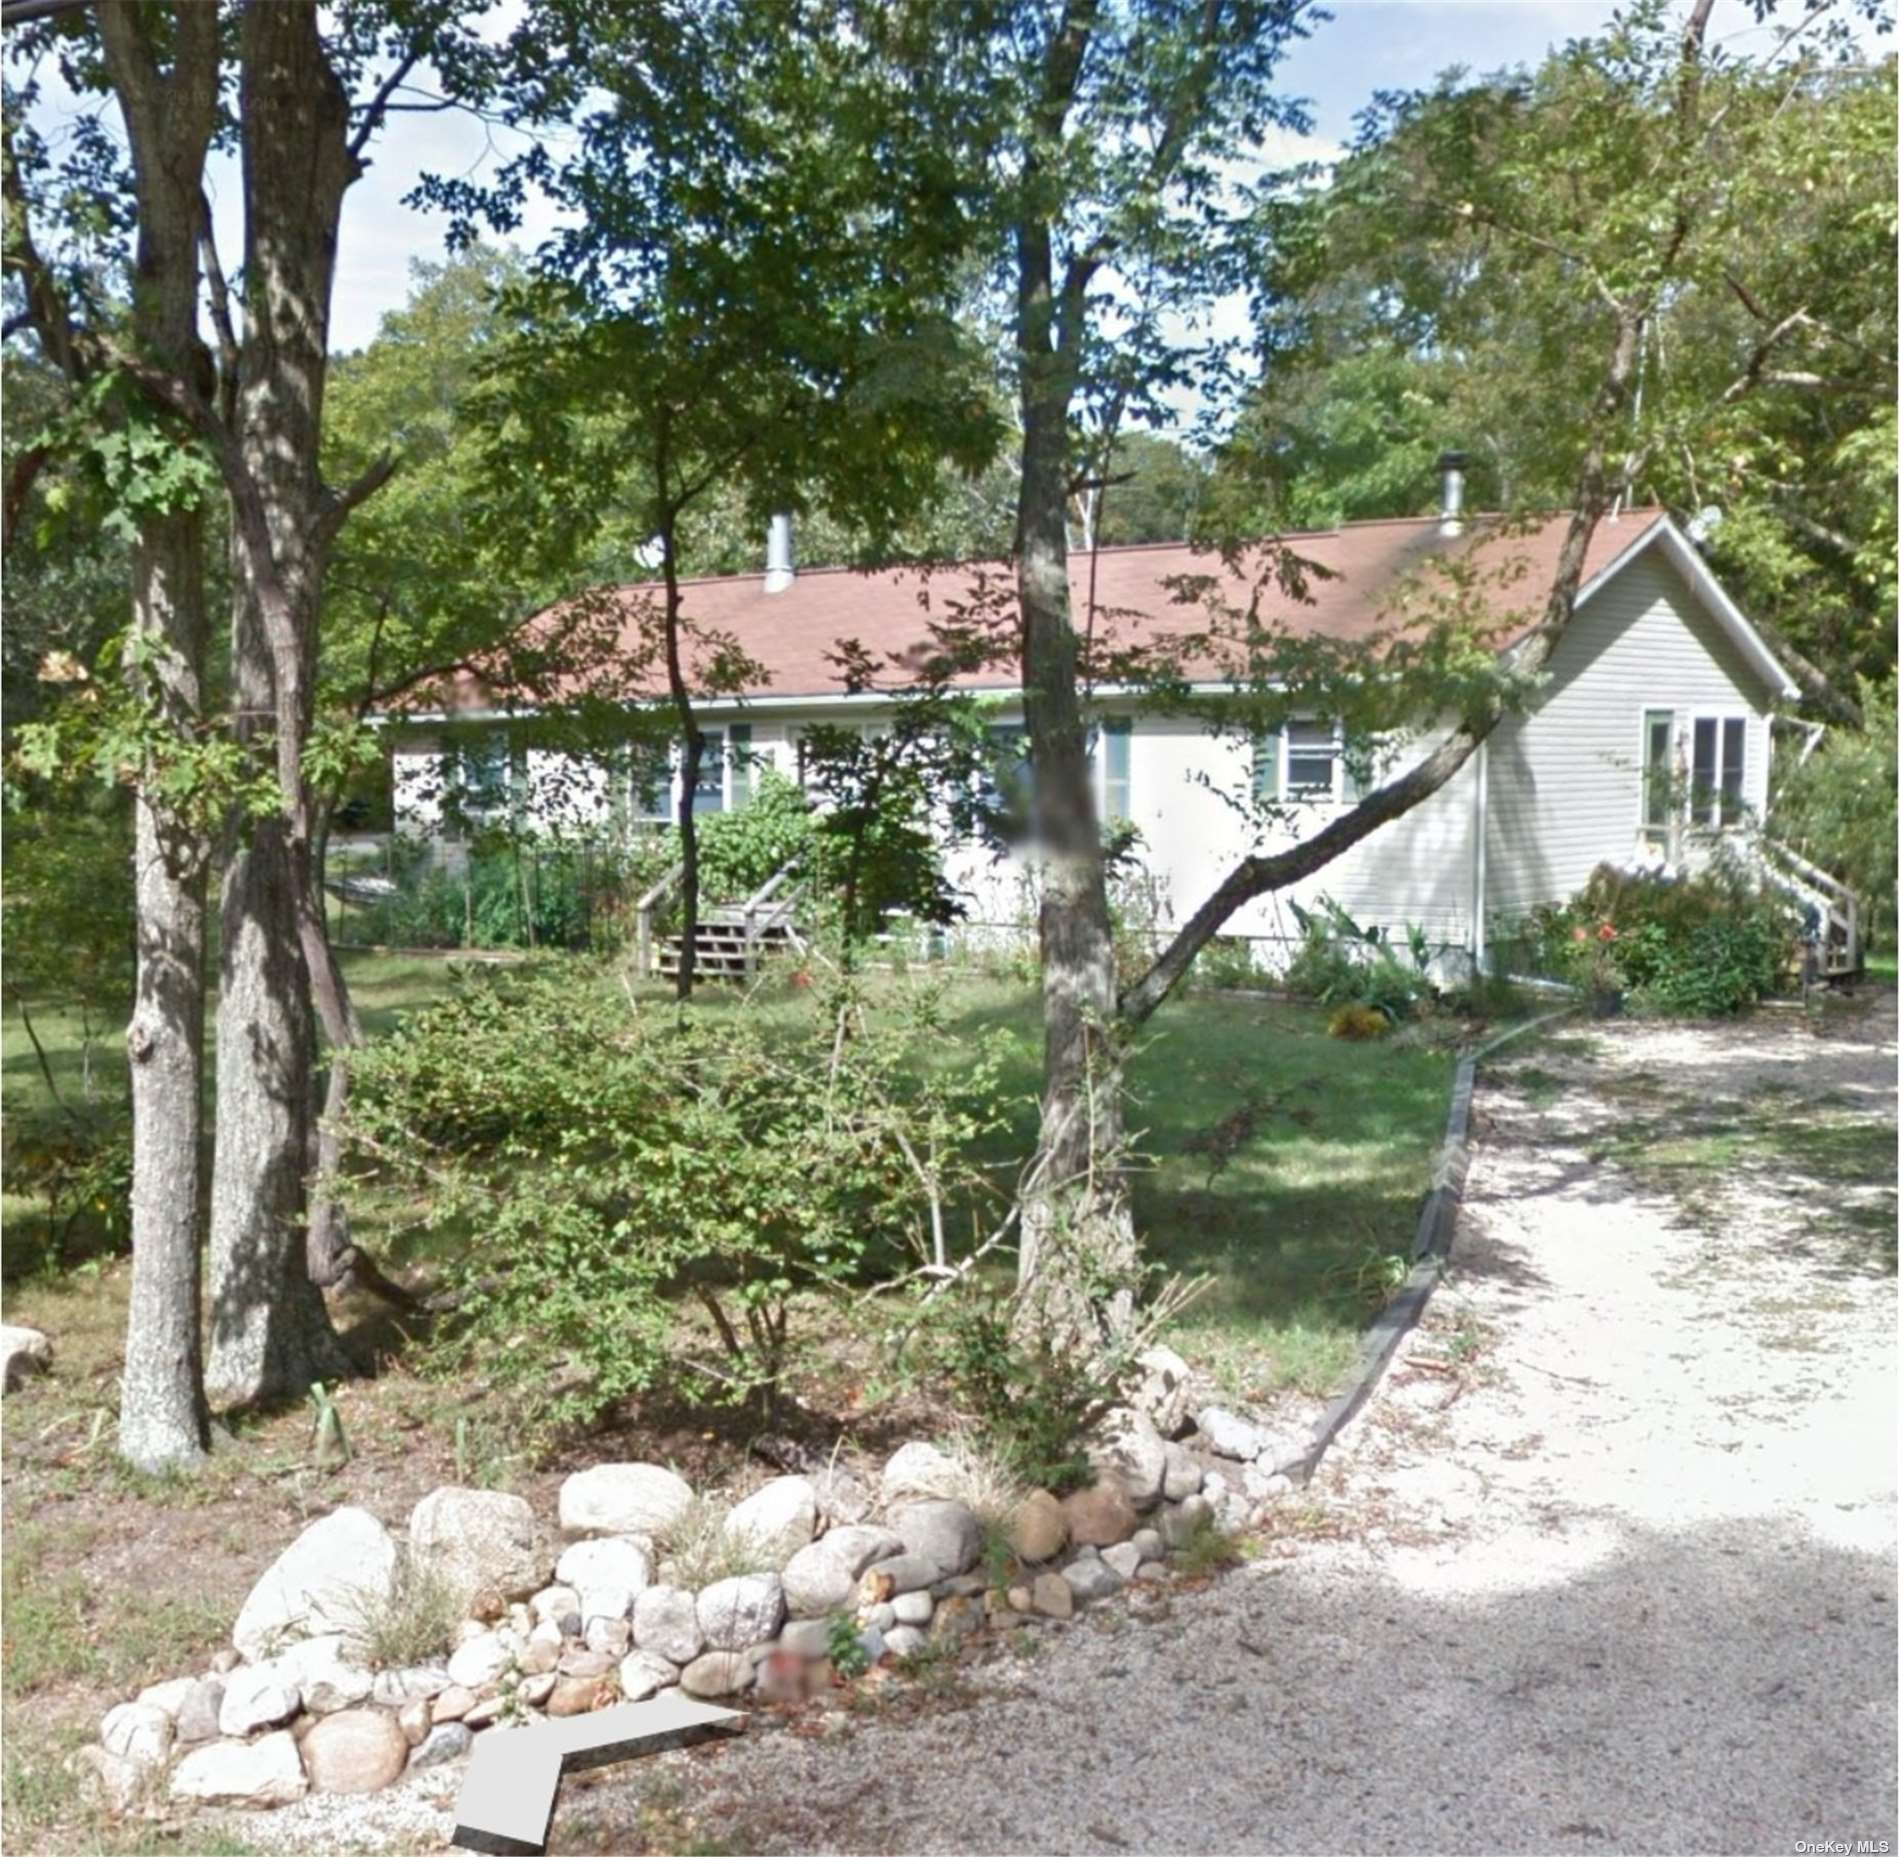 Property for Sale at 256 Three Mile Harbor Hc Road, East Hampton, Hamptons, NY - Bedrooms: 3 
Bathrooms: 2  - $1,499,000